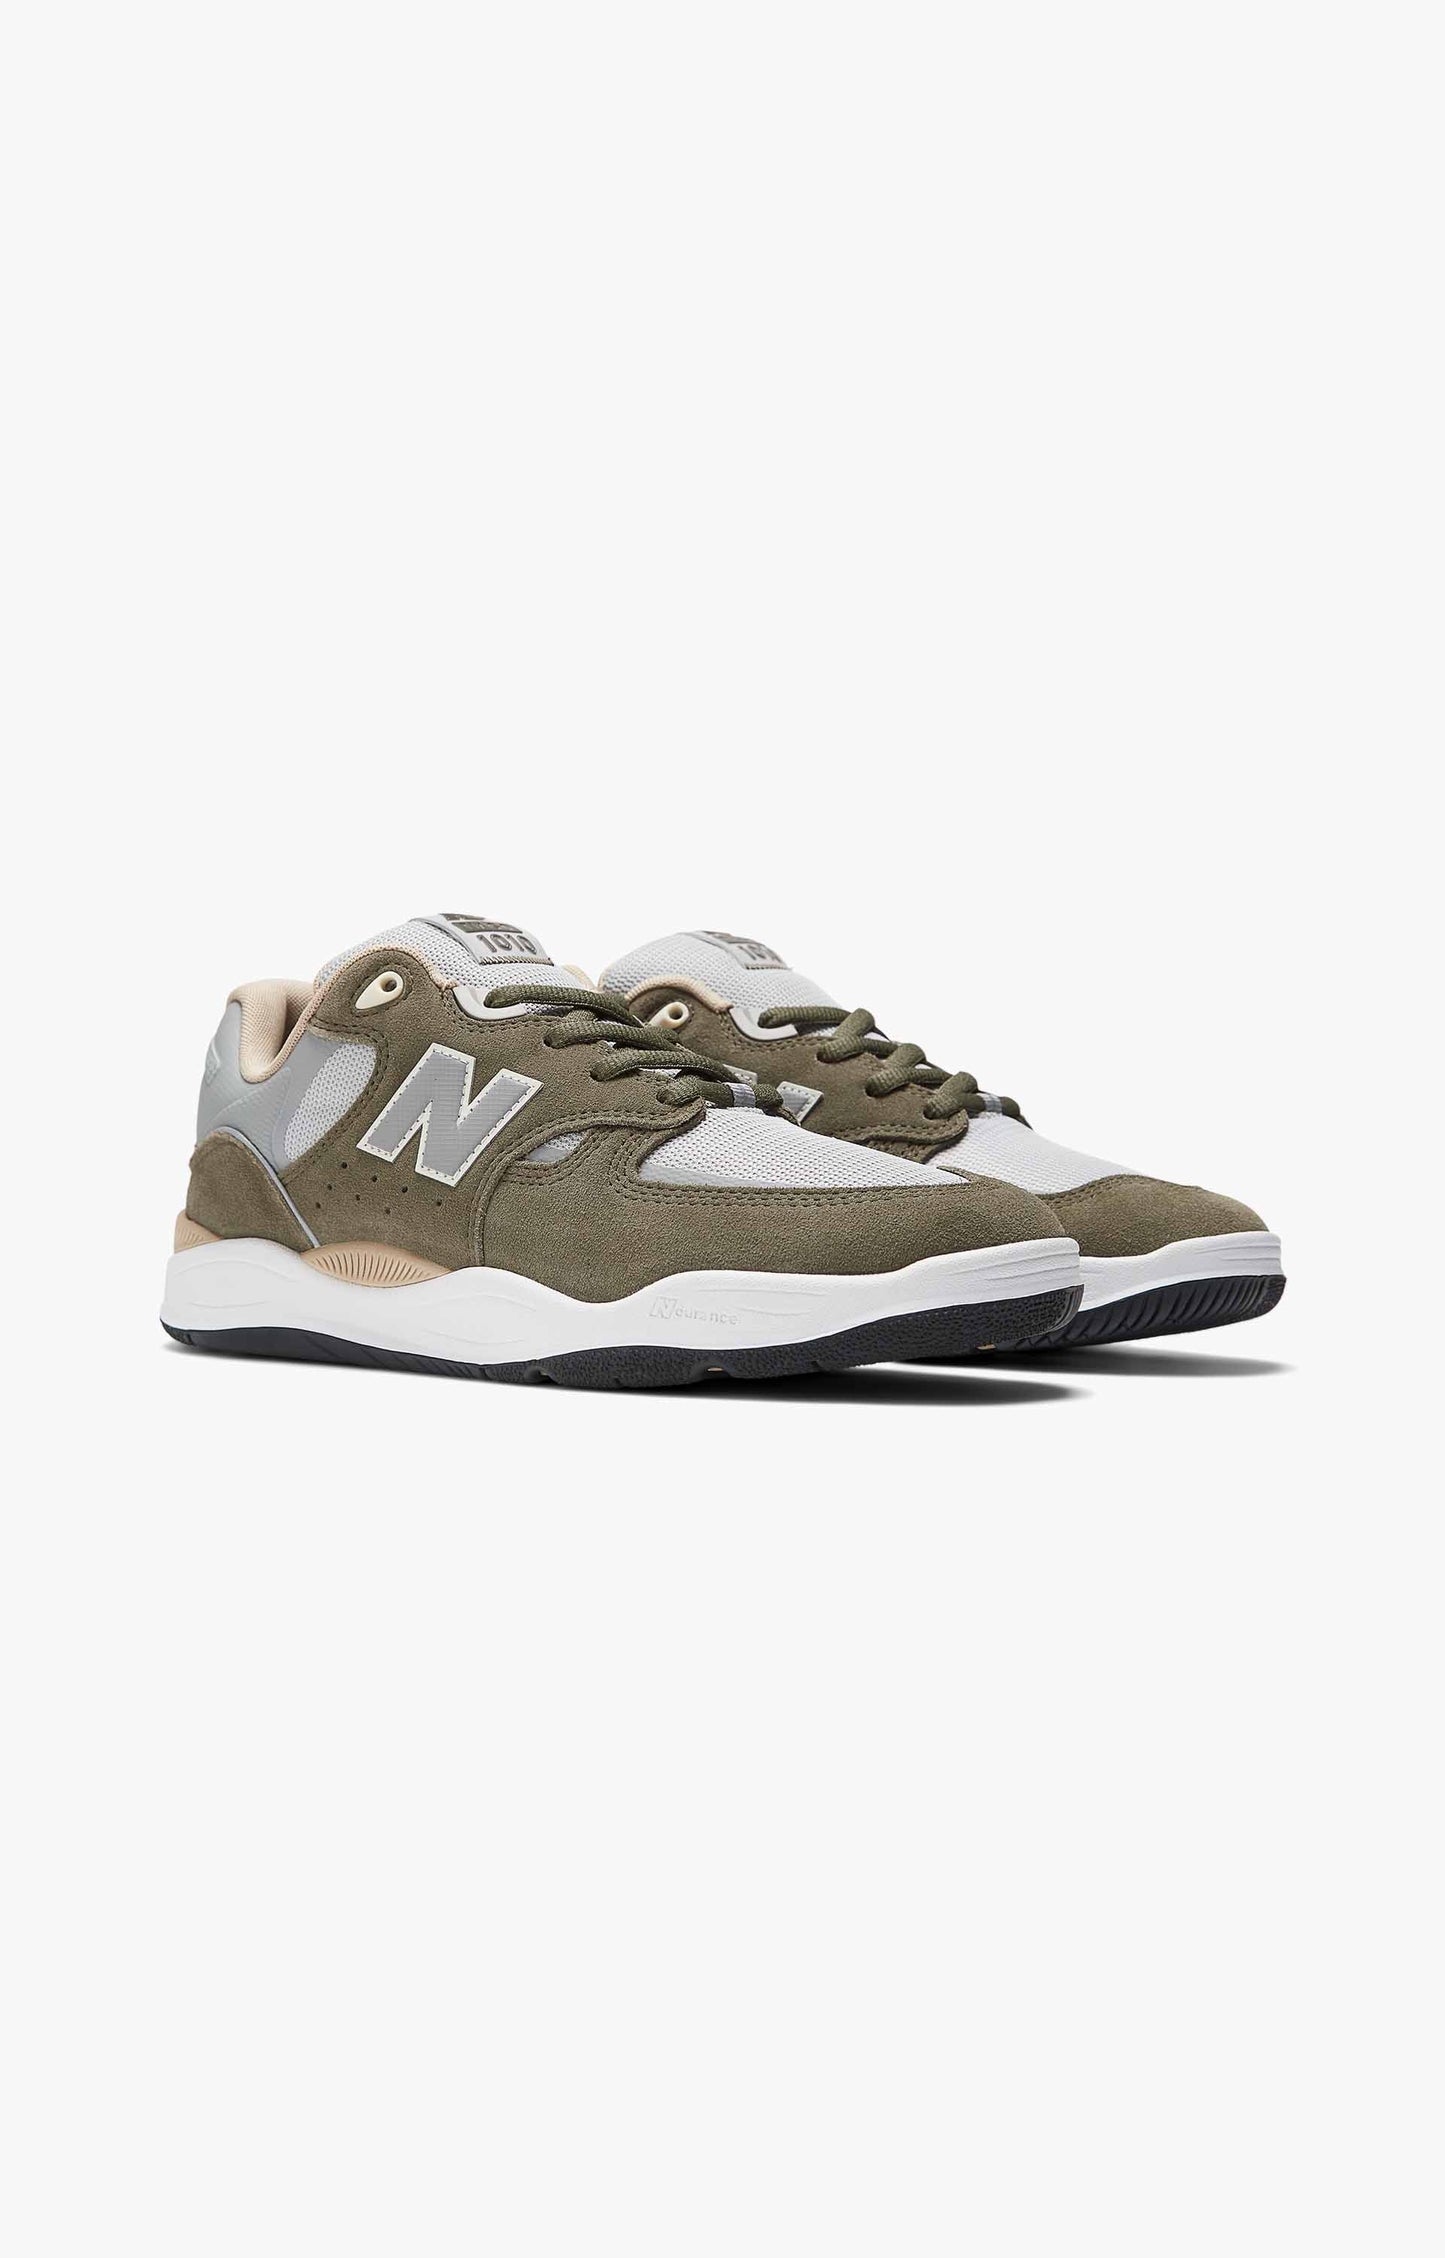 New Balance Numeric NM1010KG Olive/Grey/Hemp, Shoe